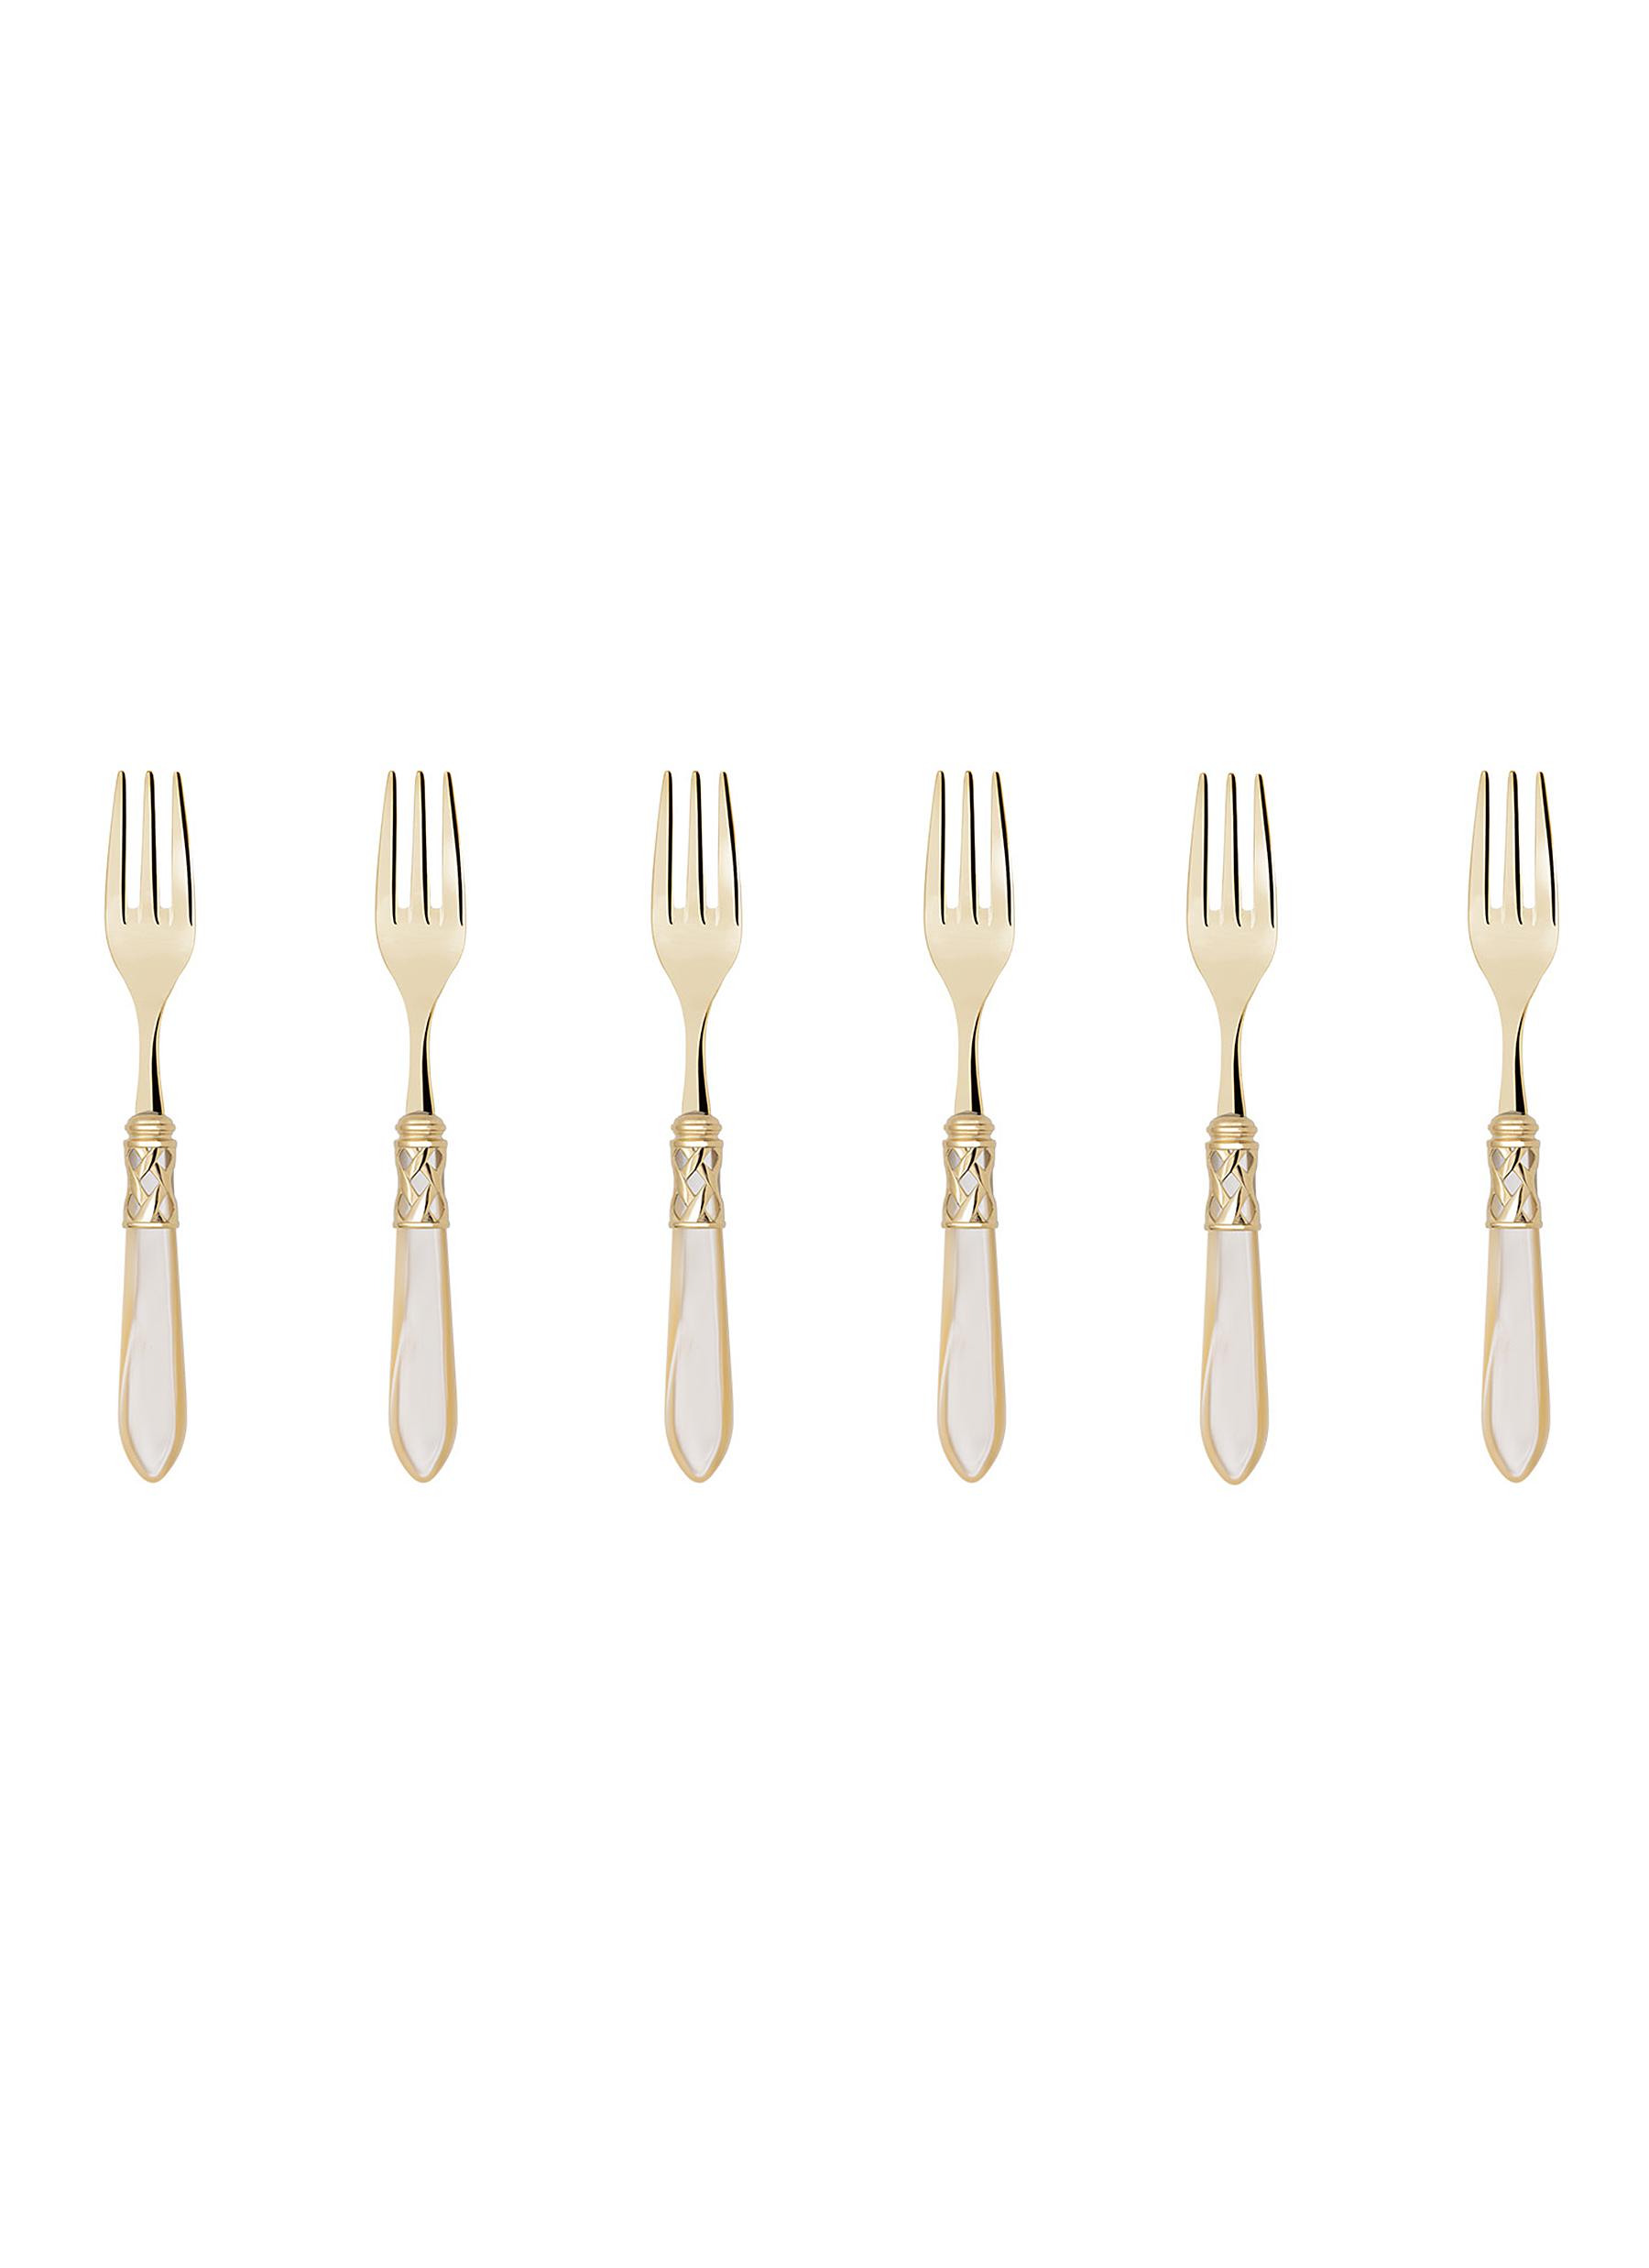 Aladdin’ 24K Gold Plated Stainless Steel Dessert Forks - Set Of 6